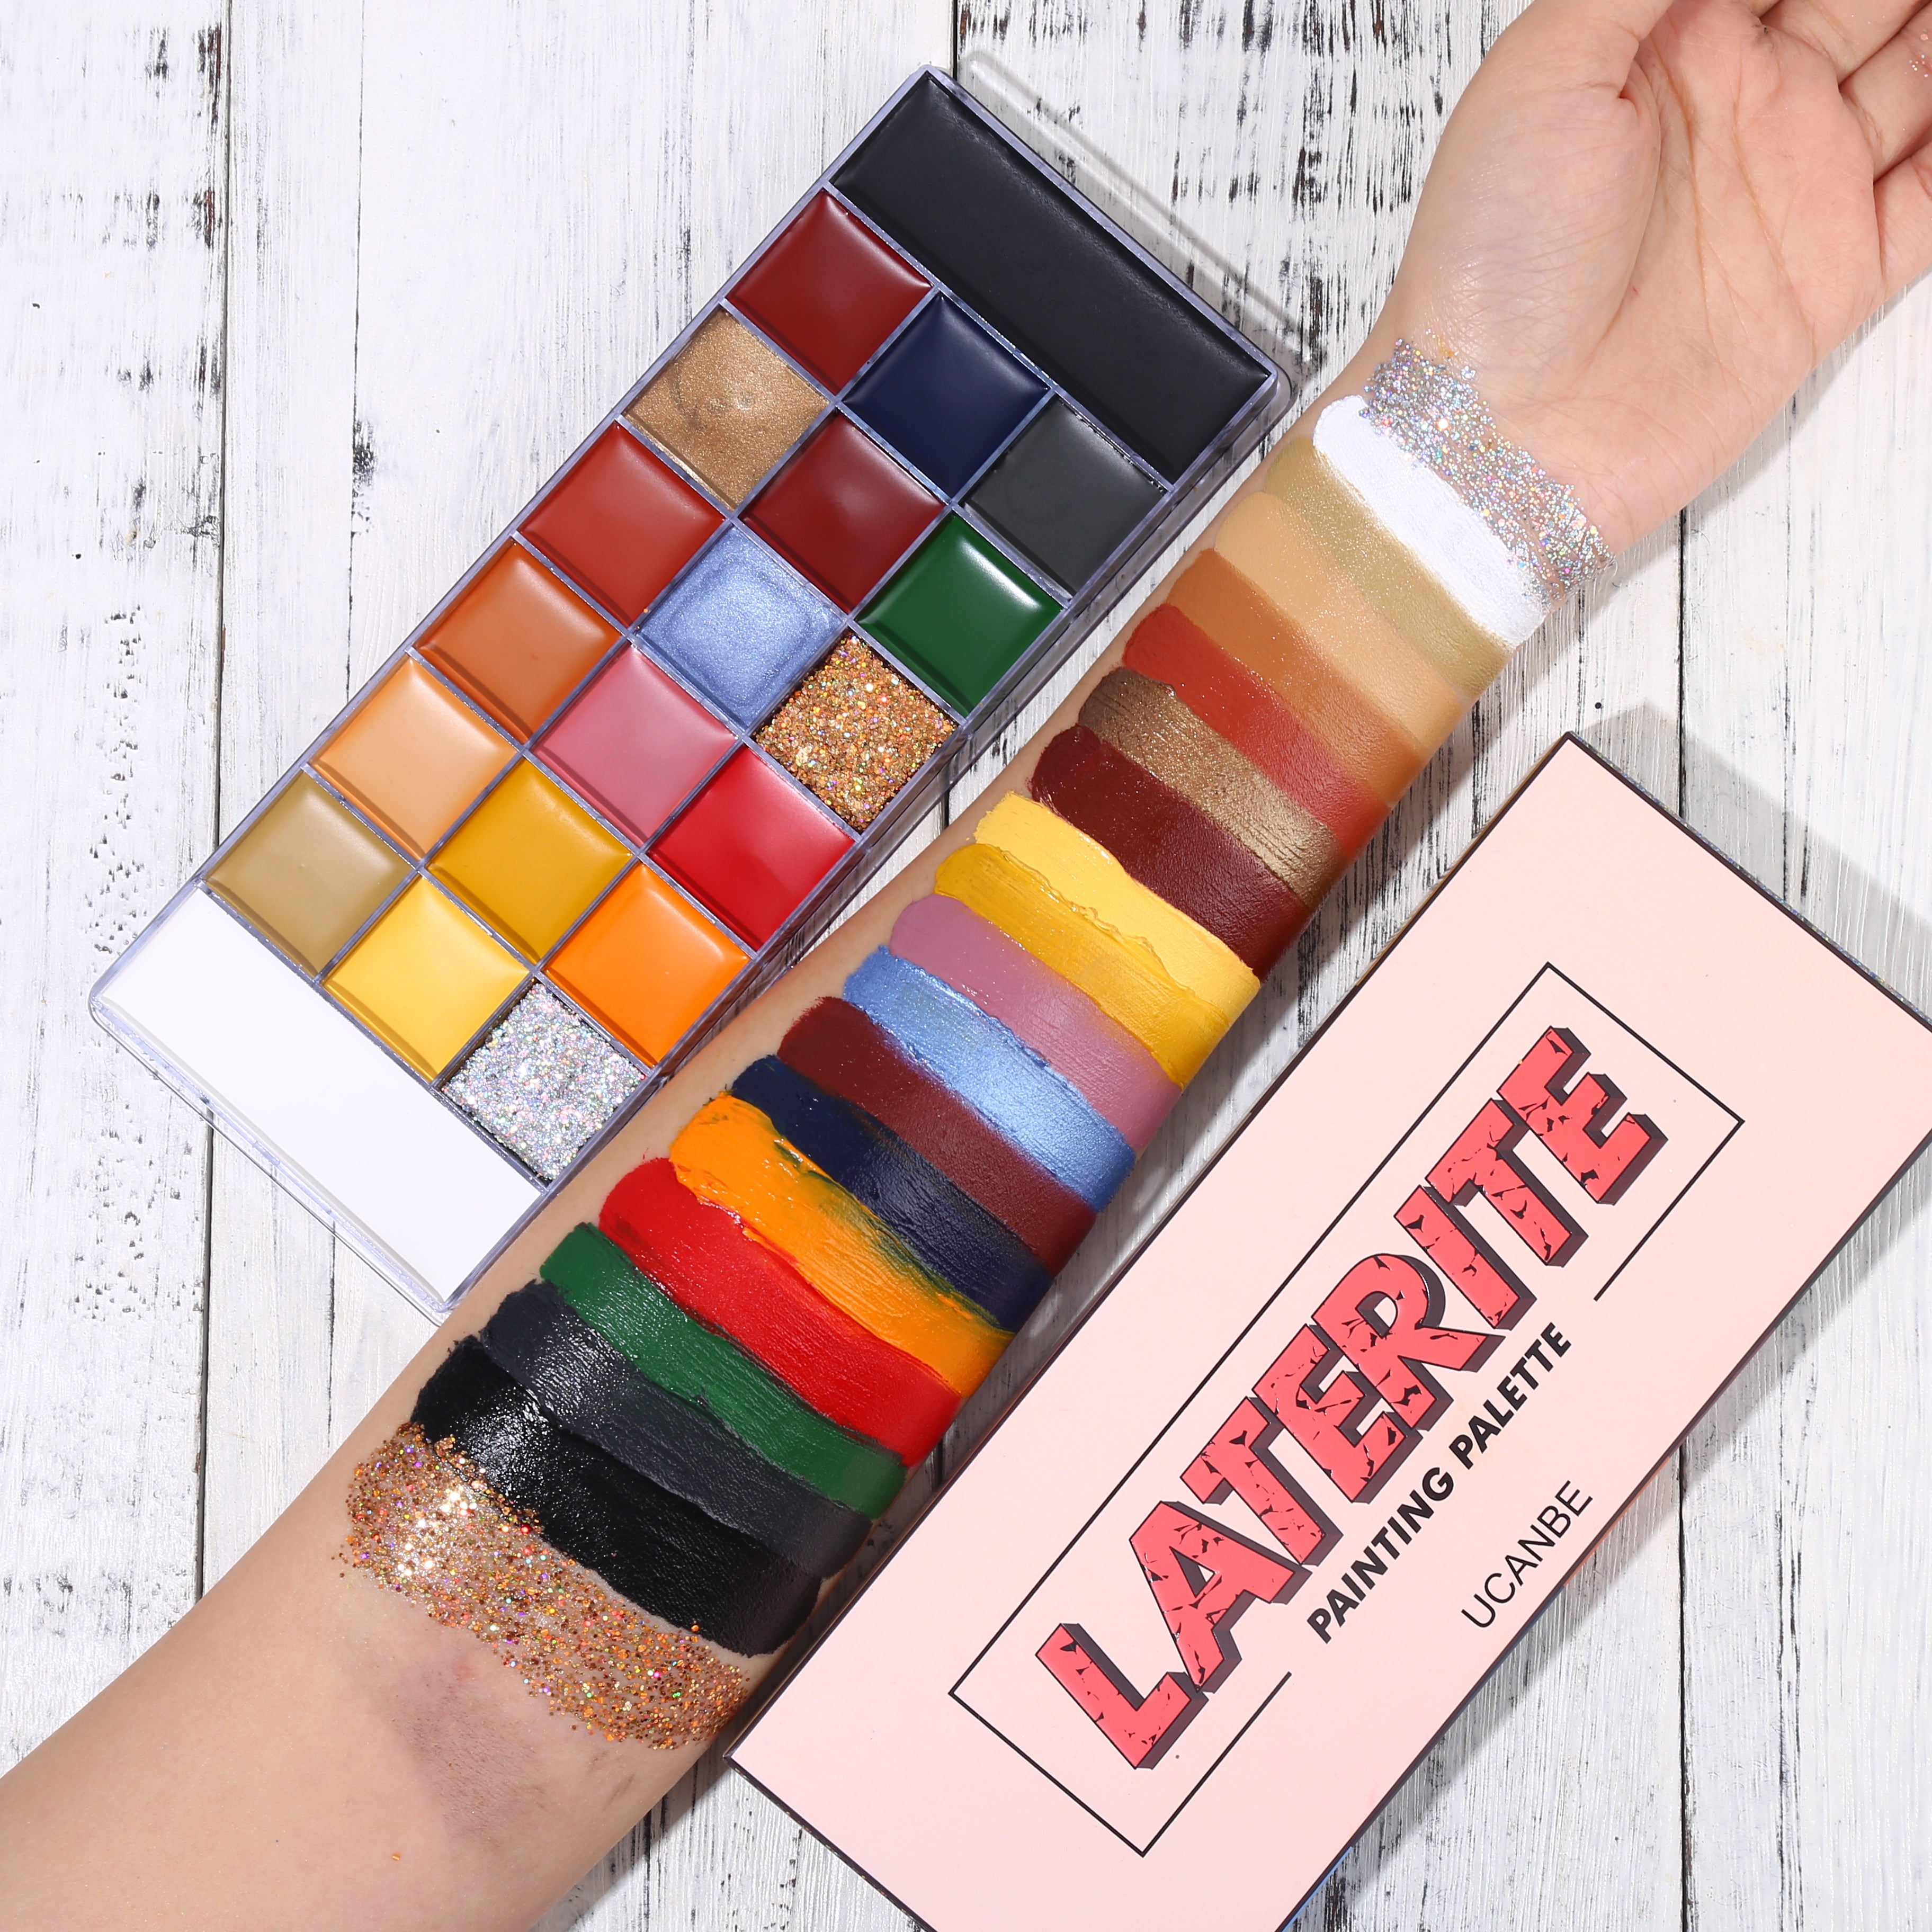 Buy UCANBE Athena Face Body Paint Oil Palette